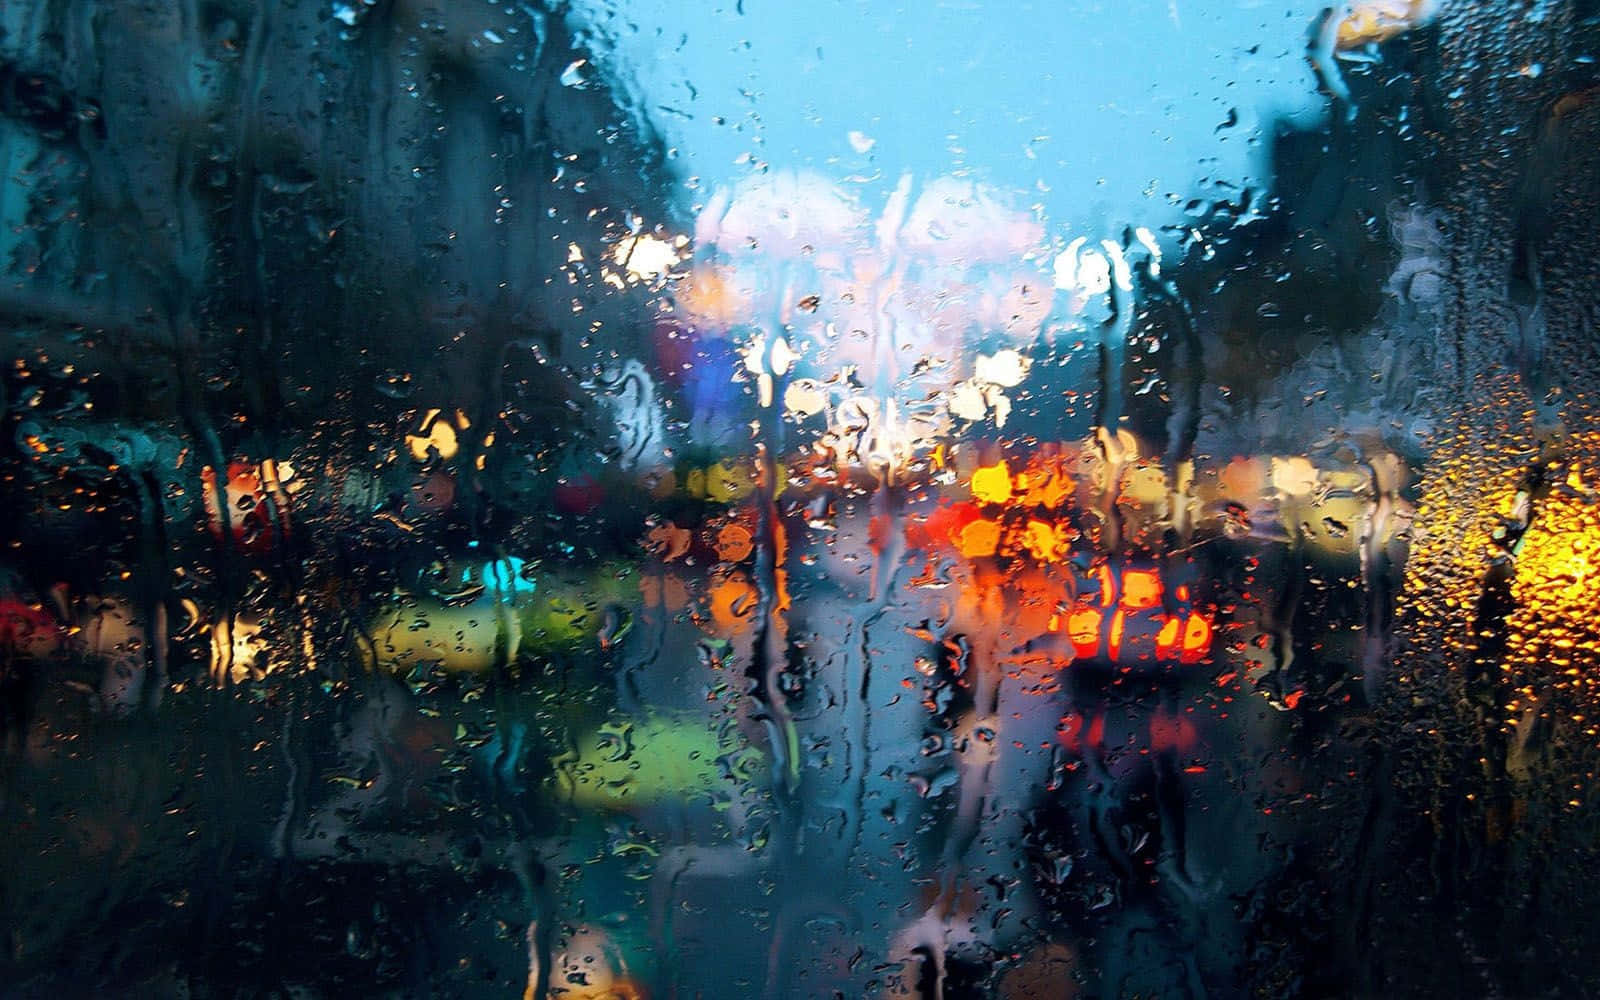 rain backgrounds for tumblr